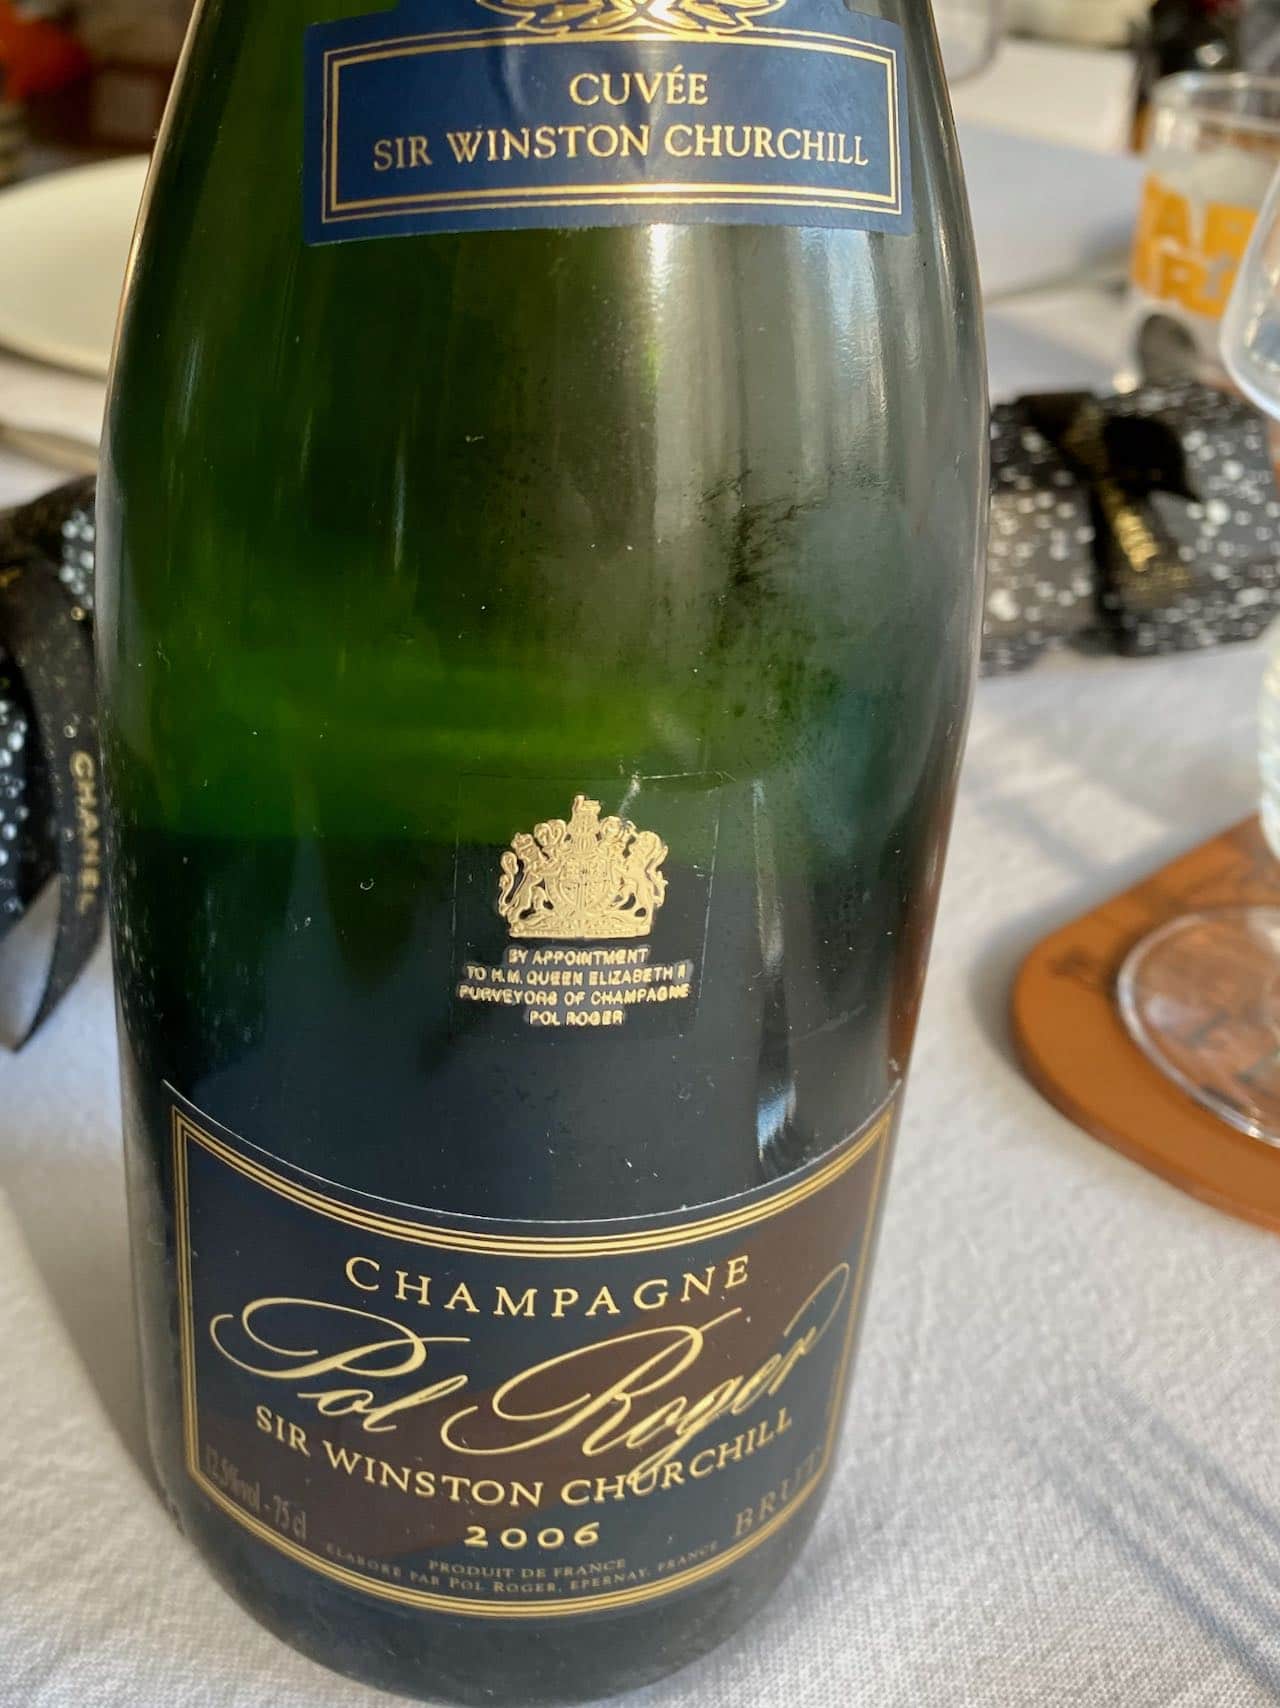 Dégustation à la volée #20 : Champagne Pol Roger Cuvée Sir Winston Churchill 2006